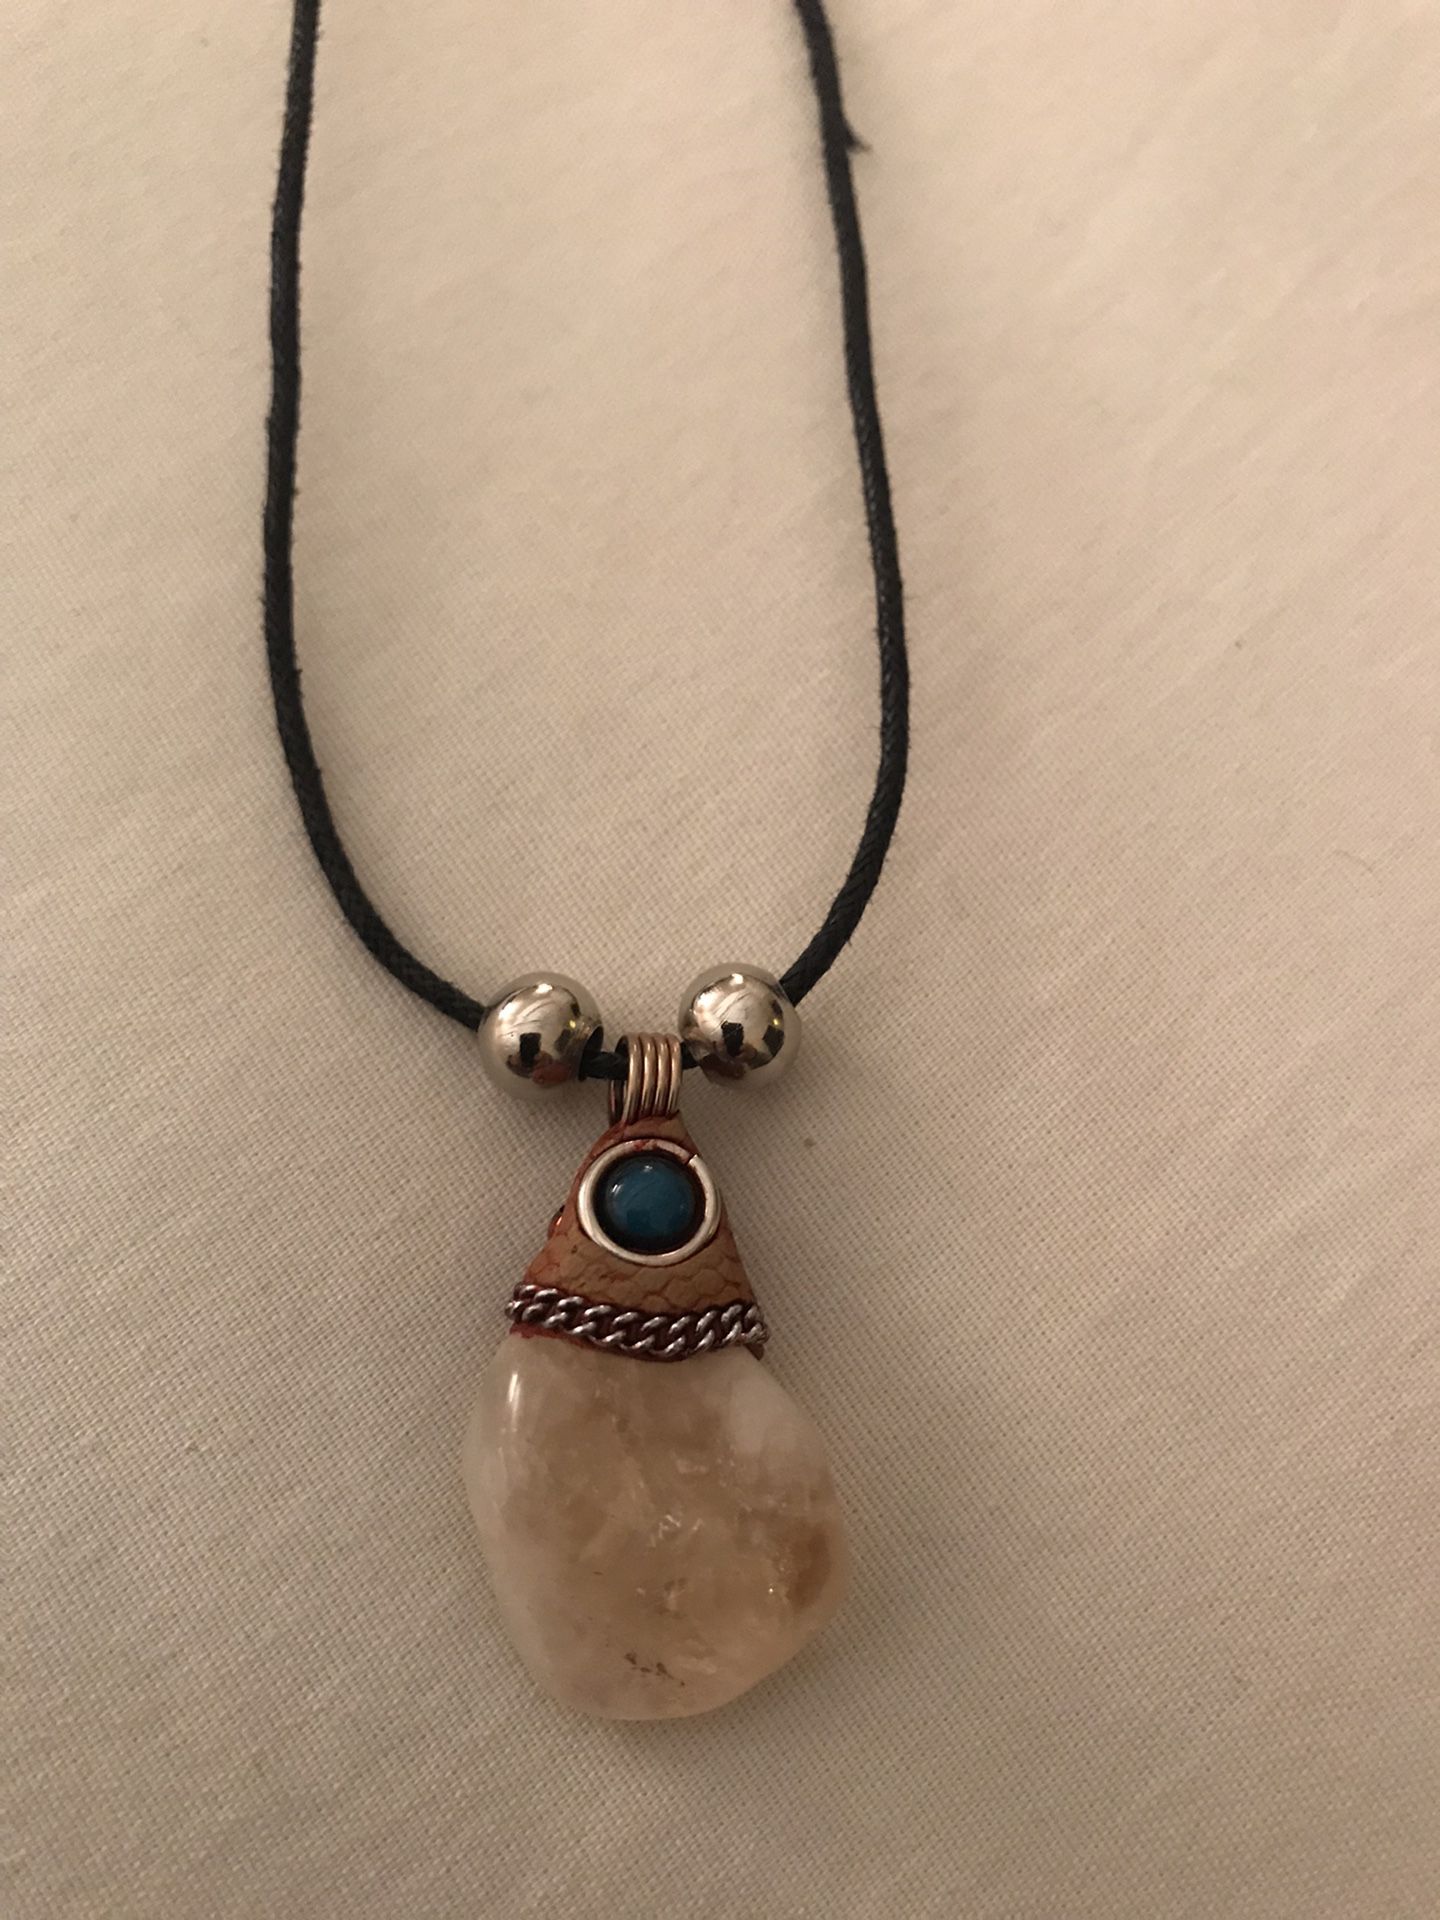 Moonstone Tumbled Stone Pendant Necklace w/Cord- Handmade